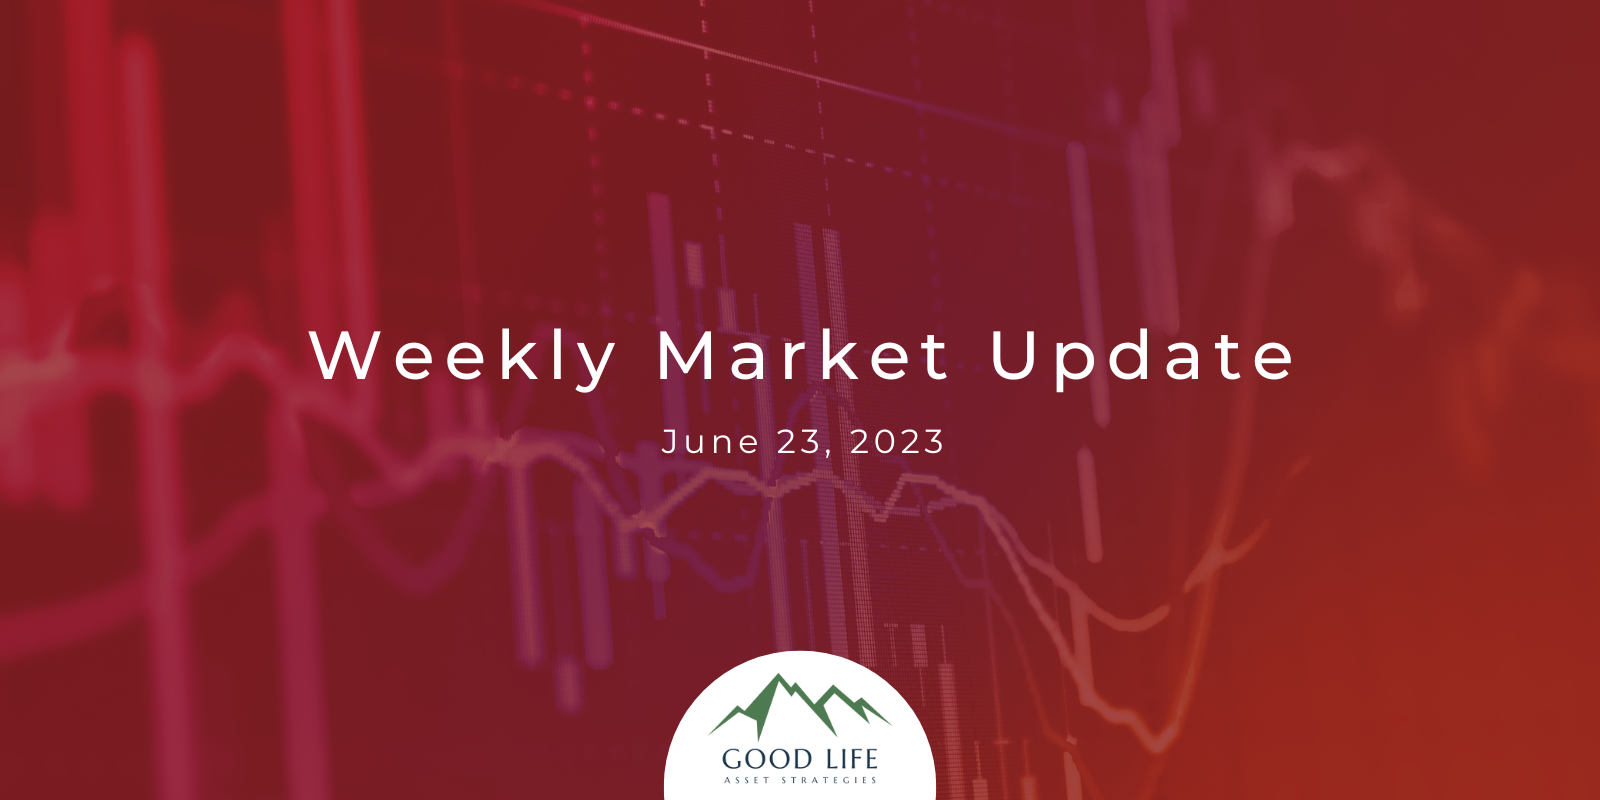 Weekly Market Update for June 23, 2023, from DeWayne Hall: Bull Run Break in the Stock Market Today